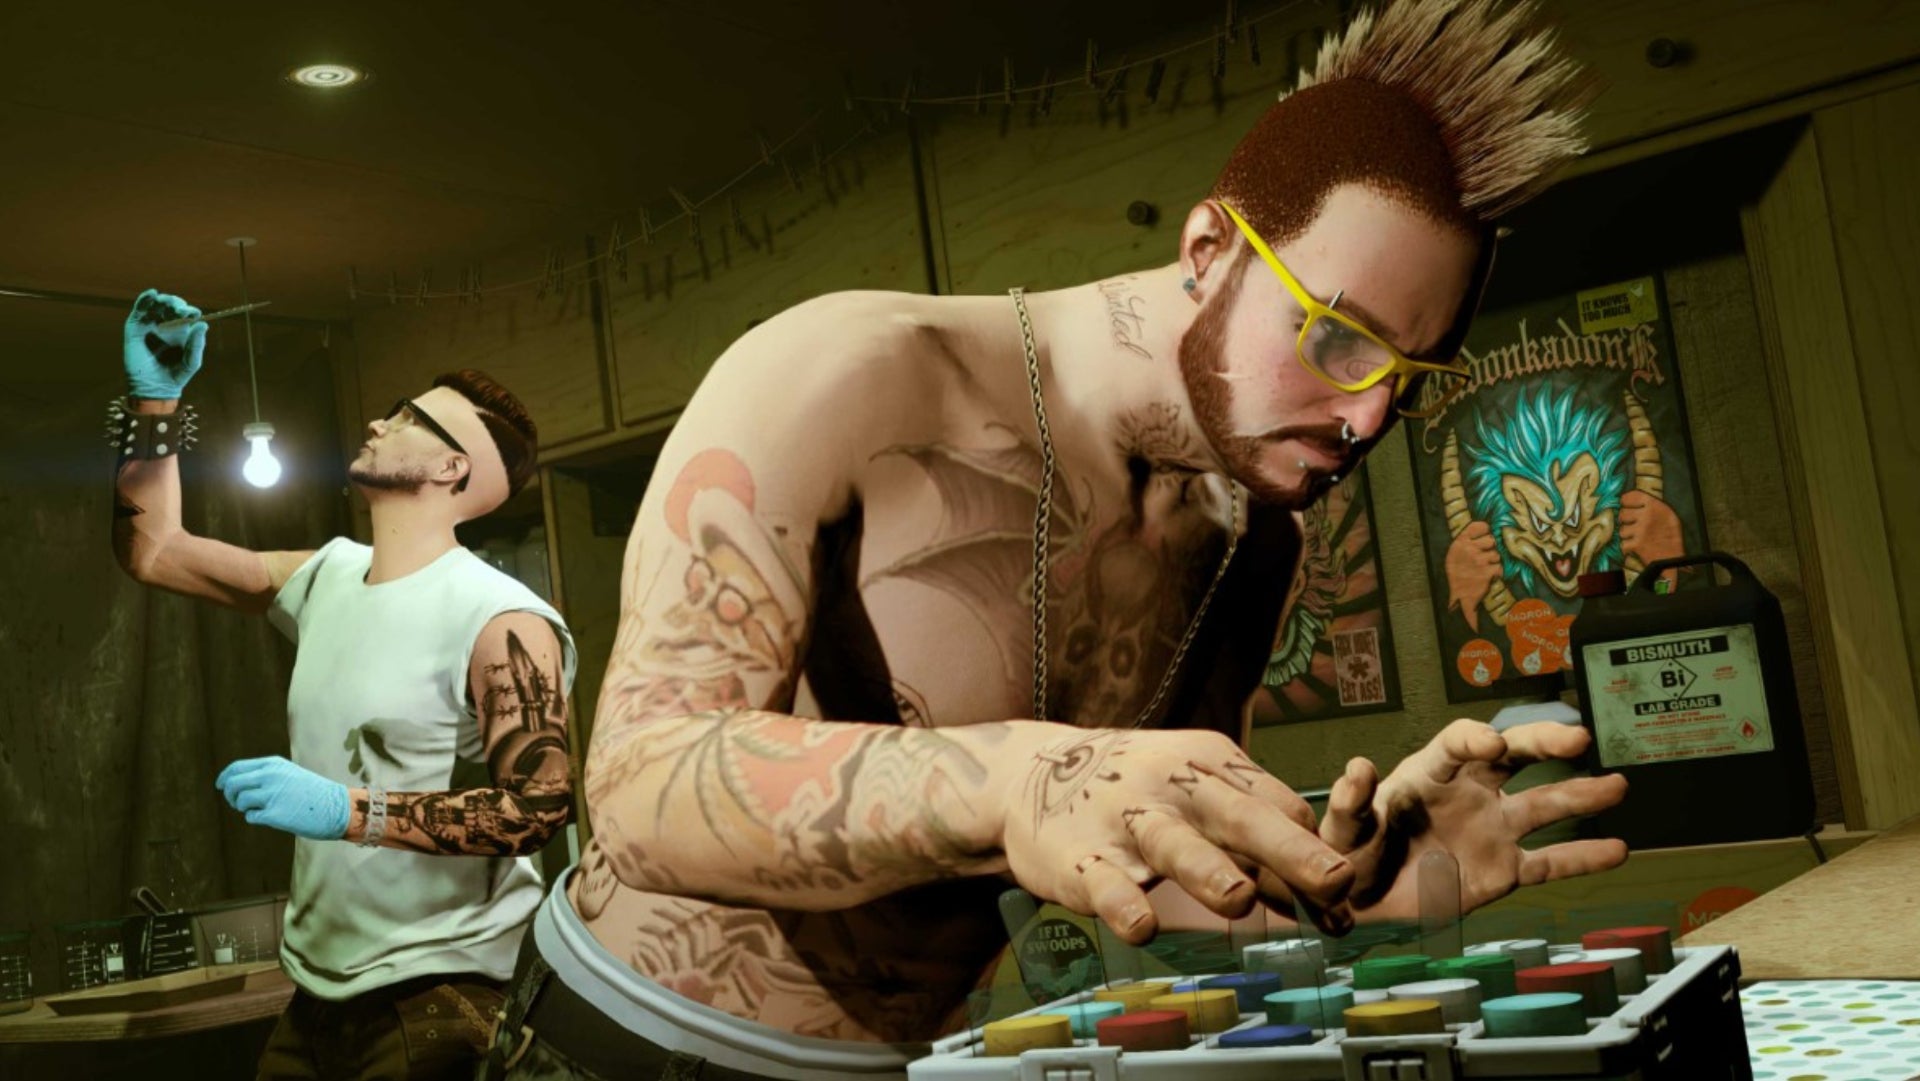 GTA Online, Rockstar Newswires offizielles Bild des Acid-Lab-Deals